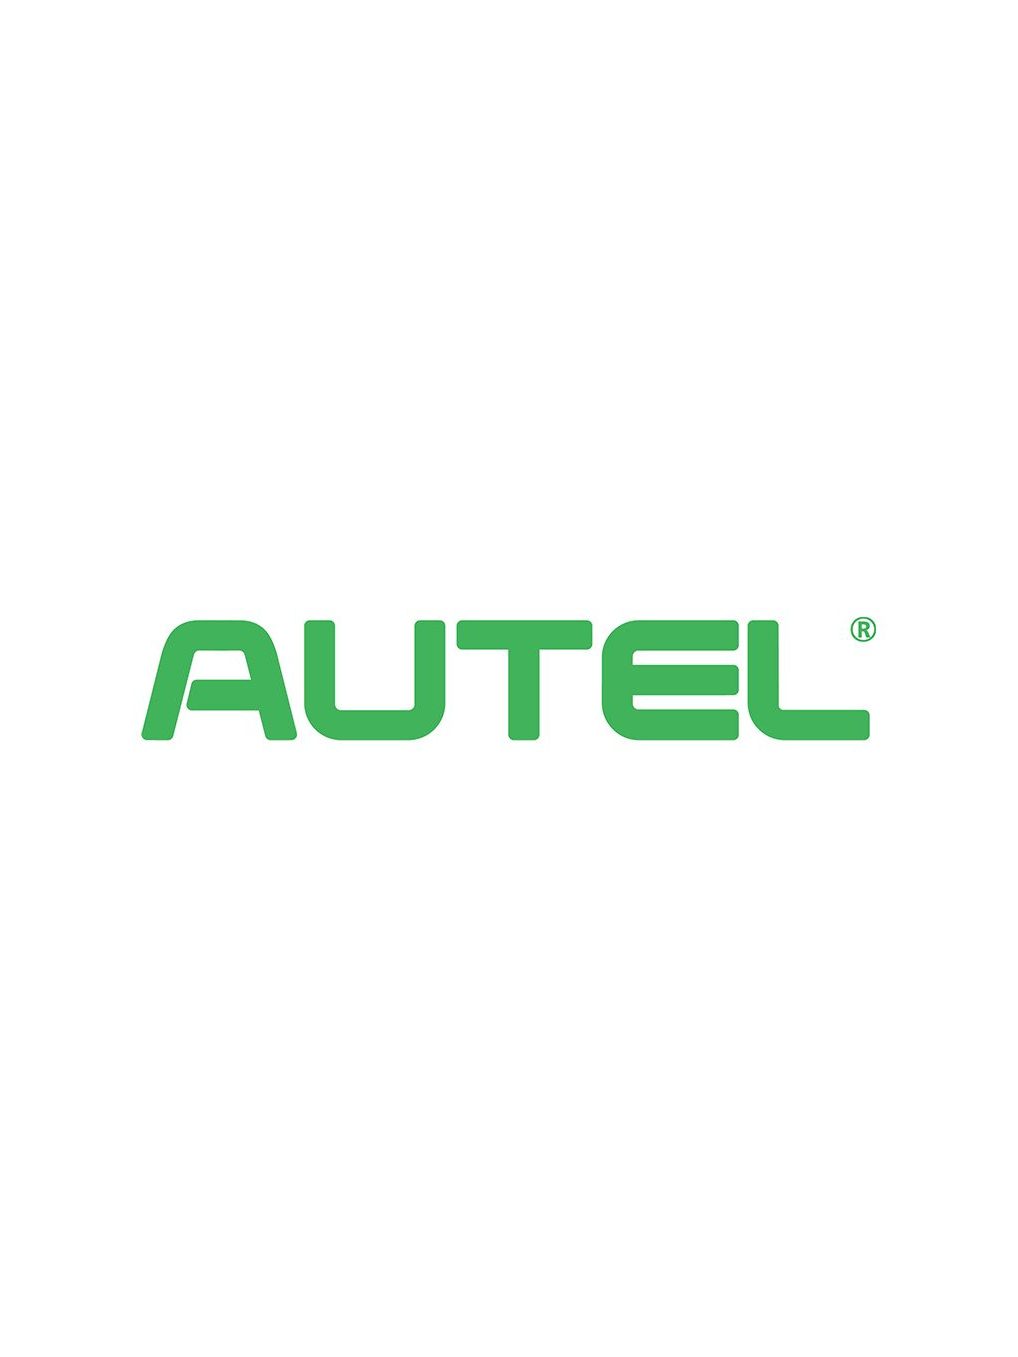 Autel Logo